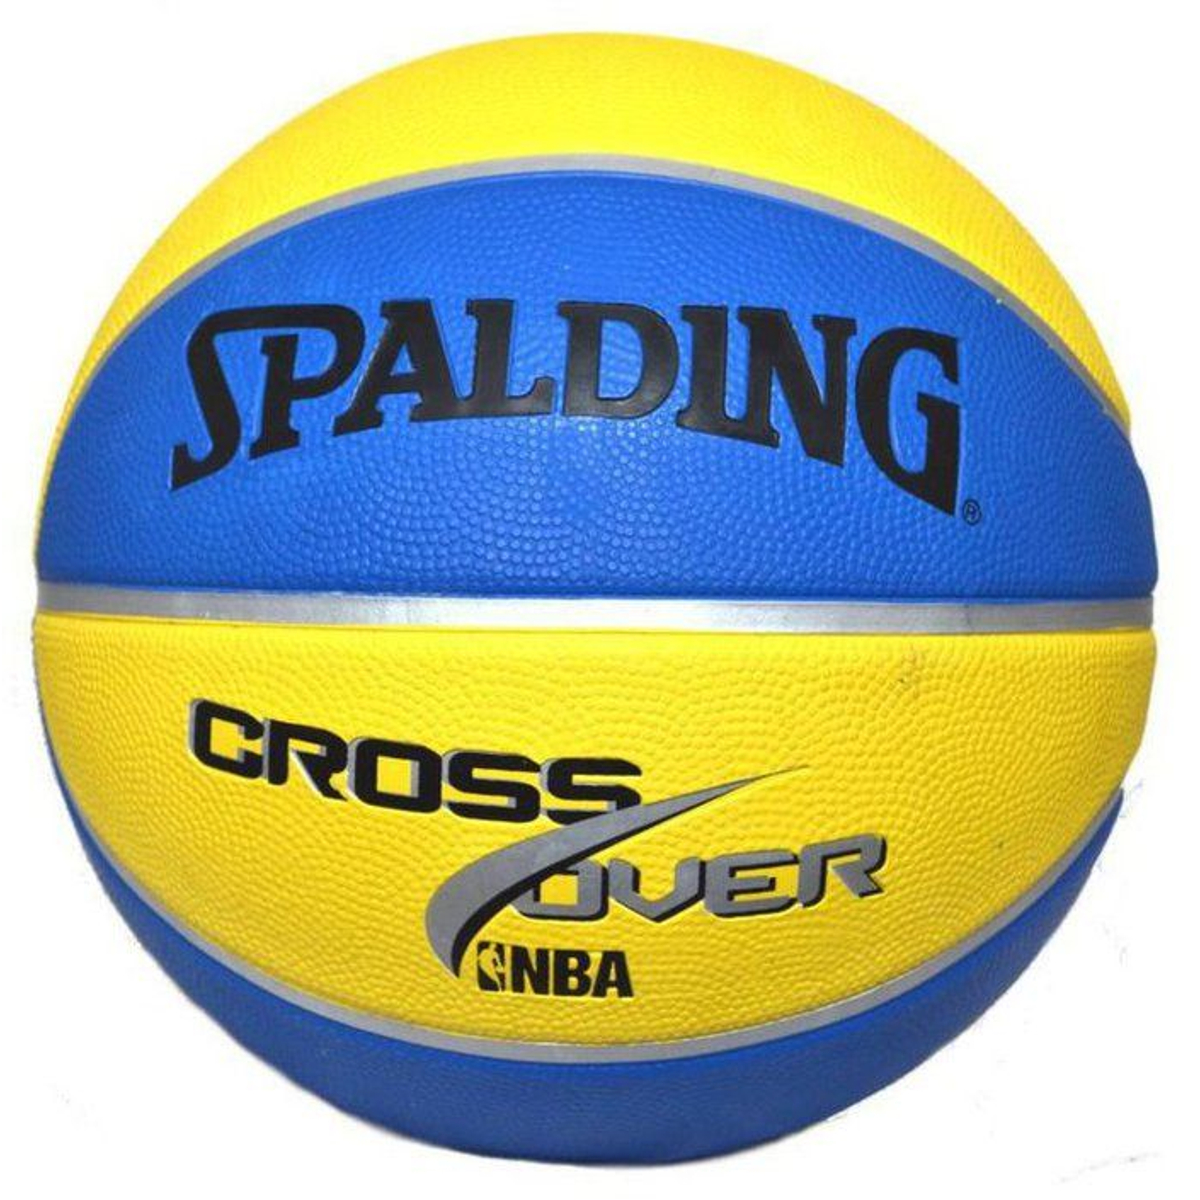 Spalding Cross Over Basketbal